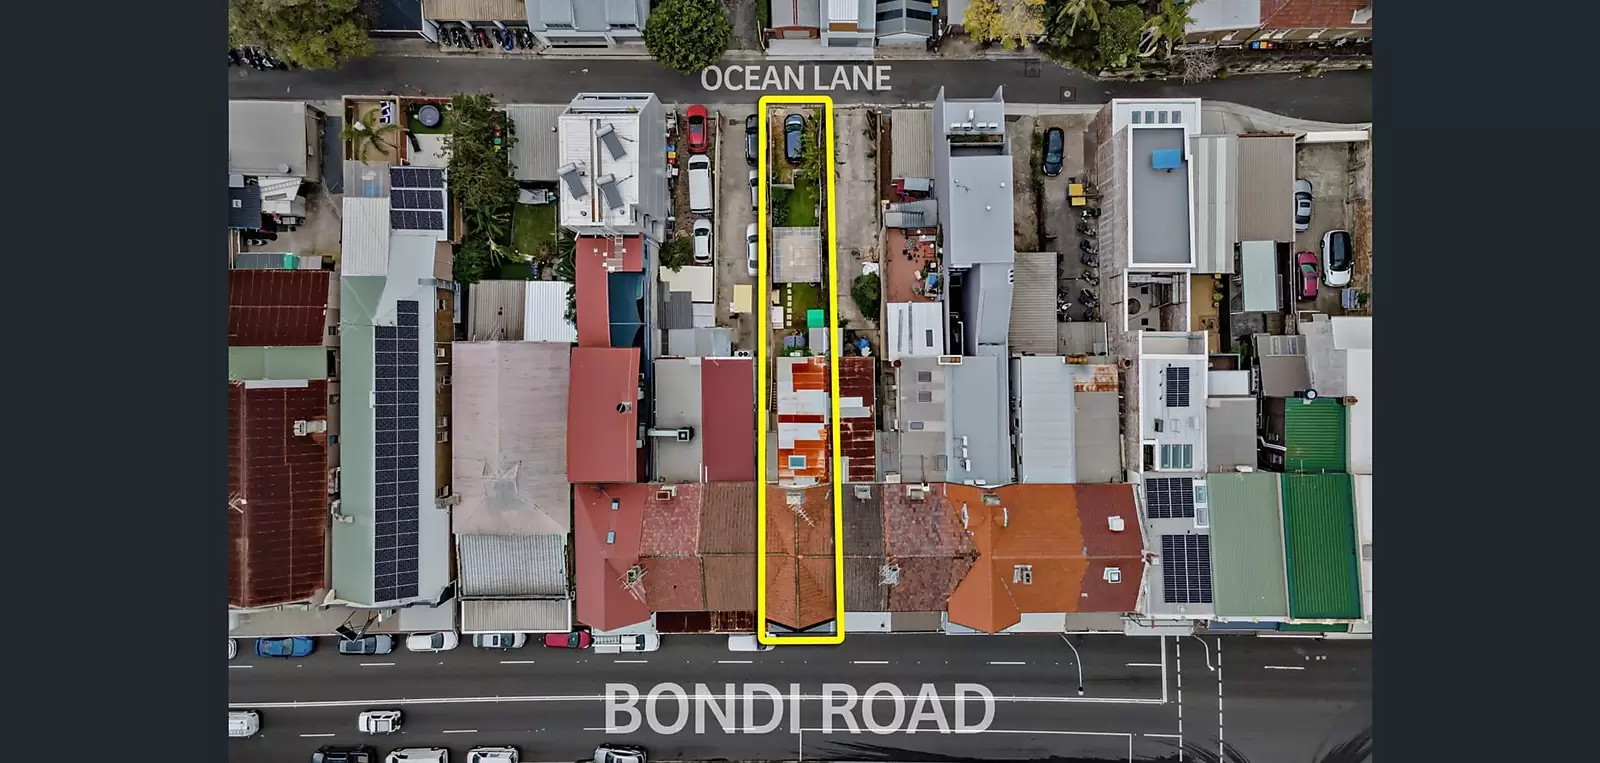 95 Bondi Road, Bondi For Sale by Sydney Sotheby's International Realty - image 1